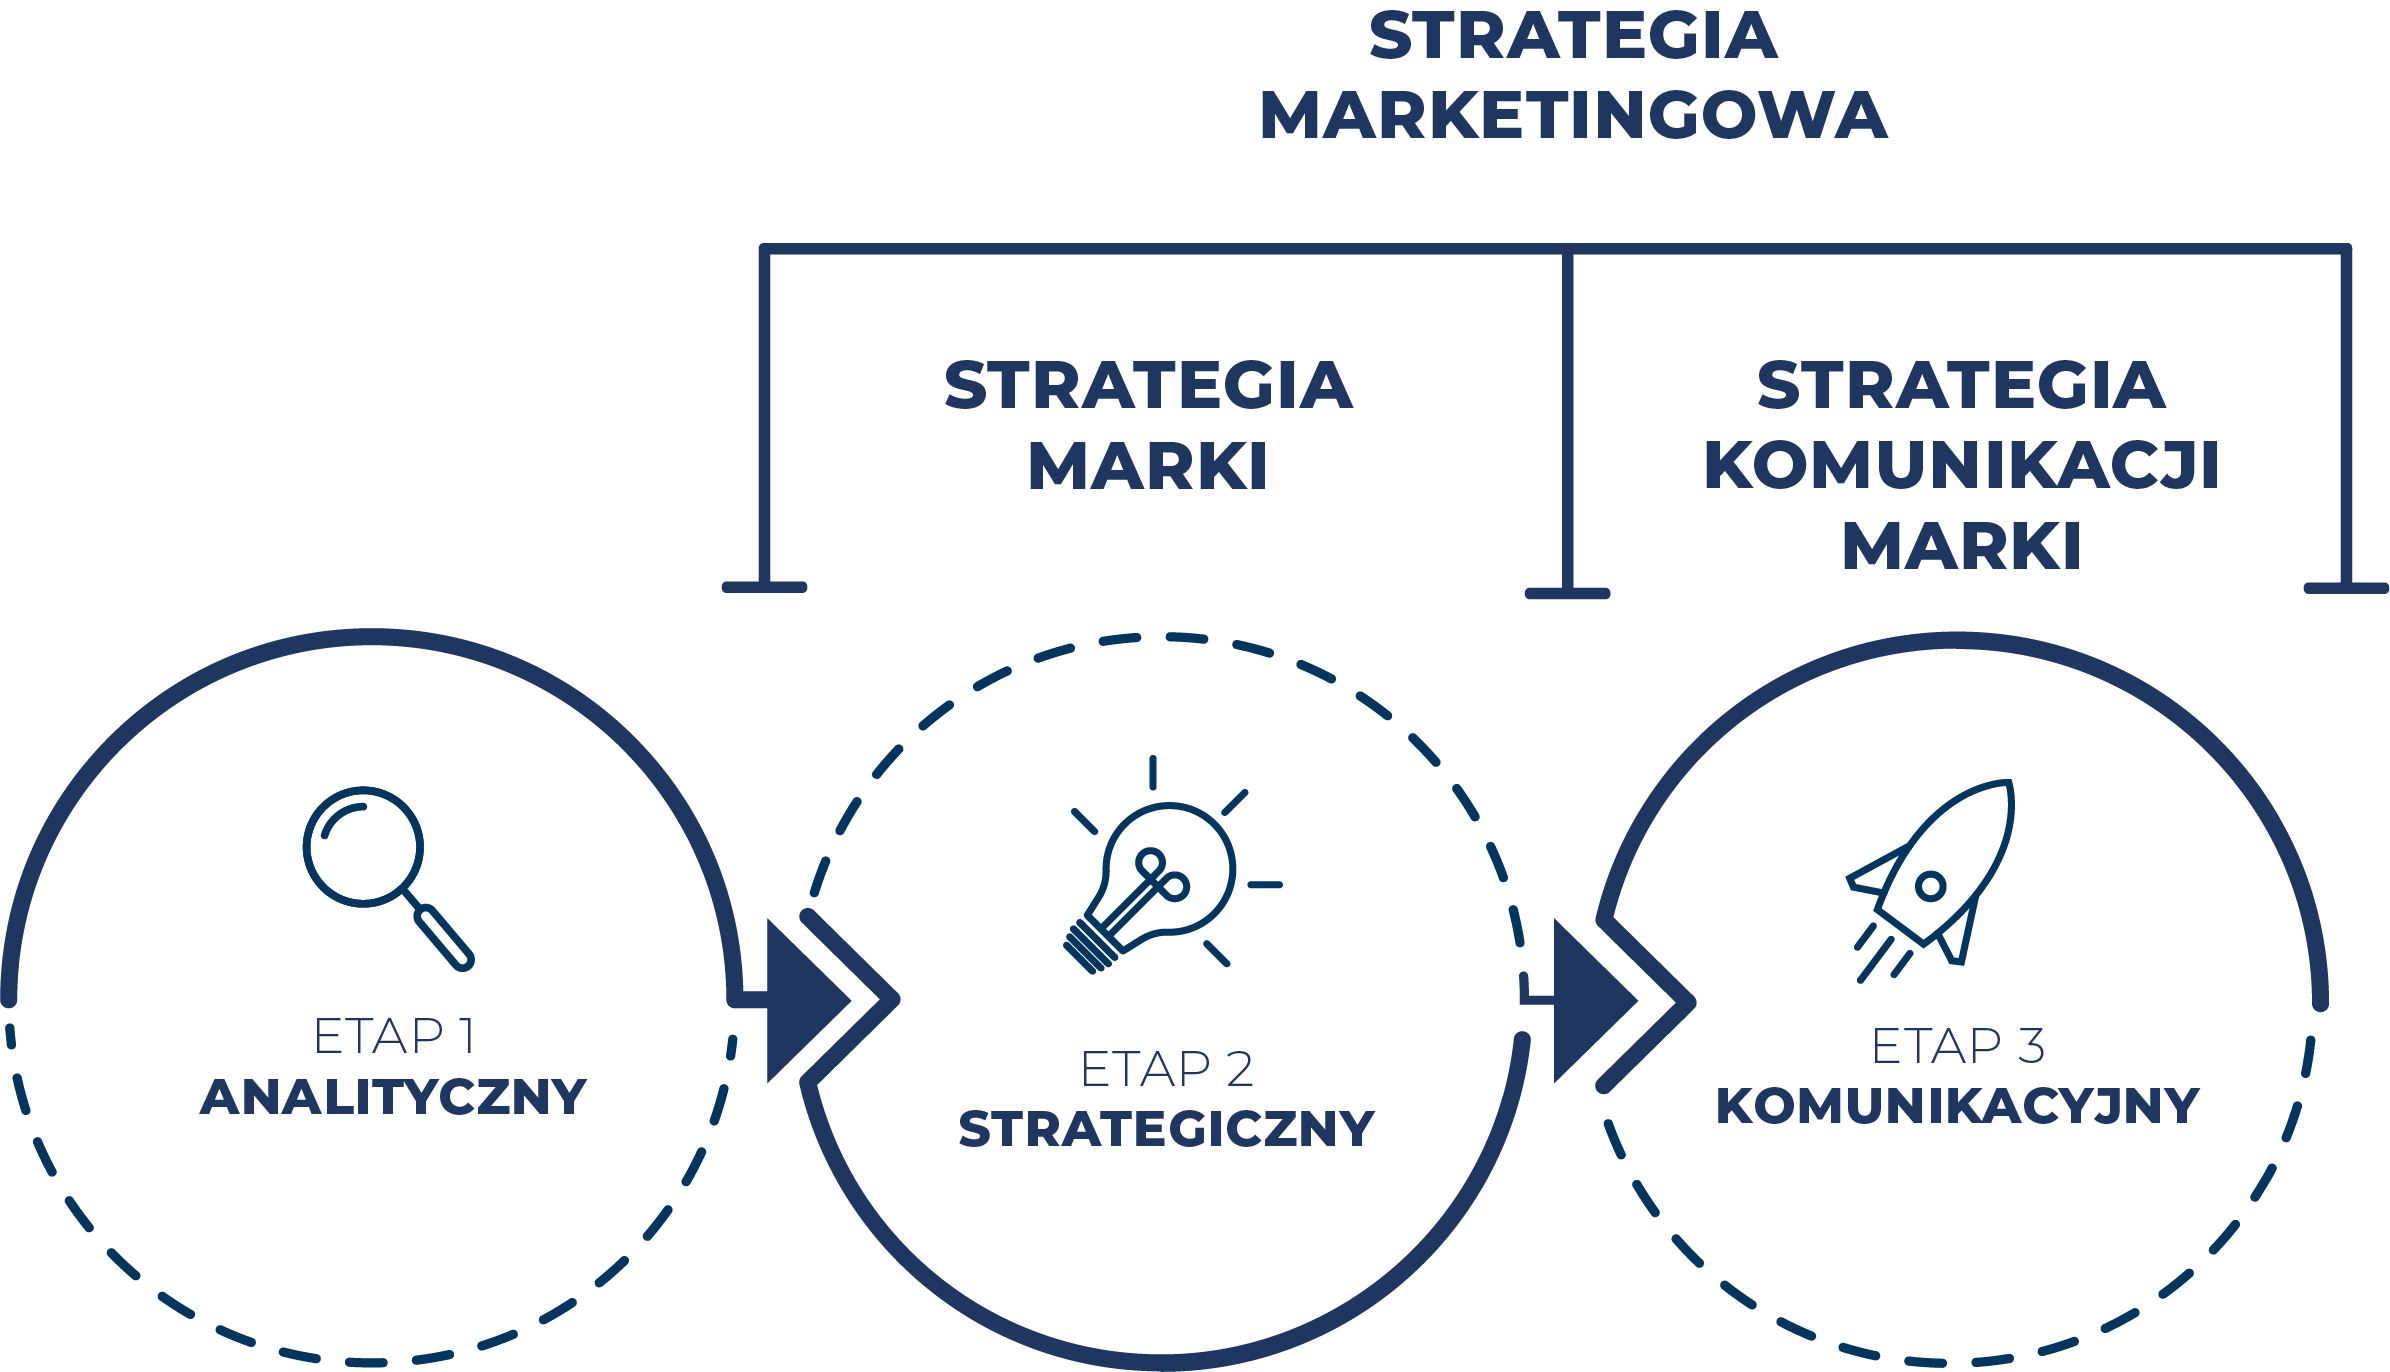 etapy strategia marketingowa – strategia marki